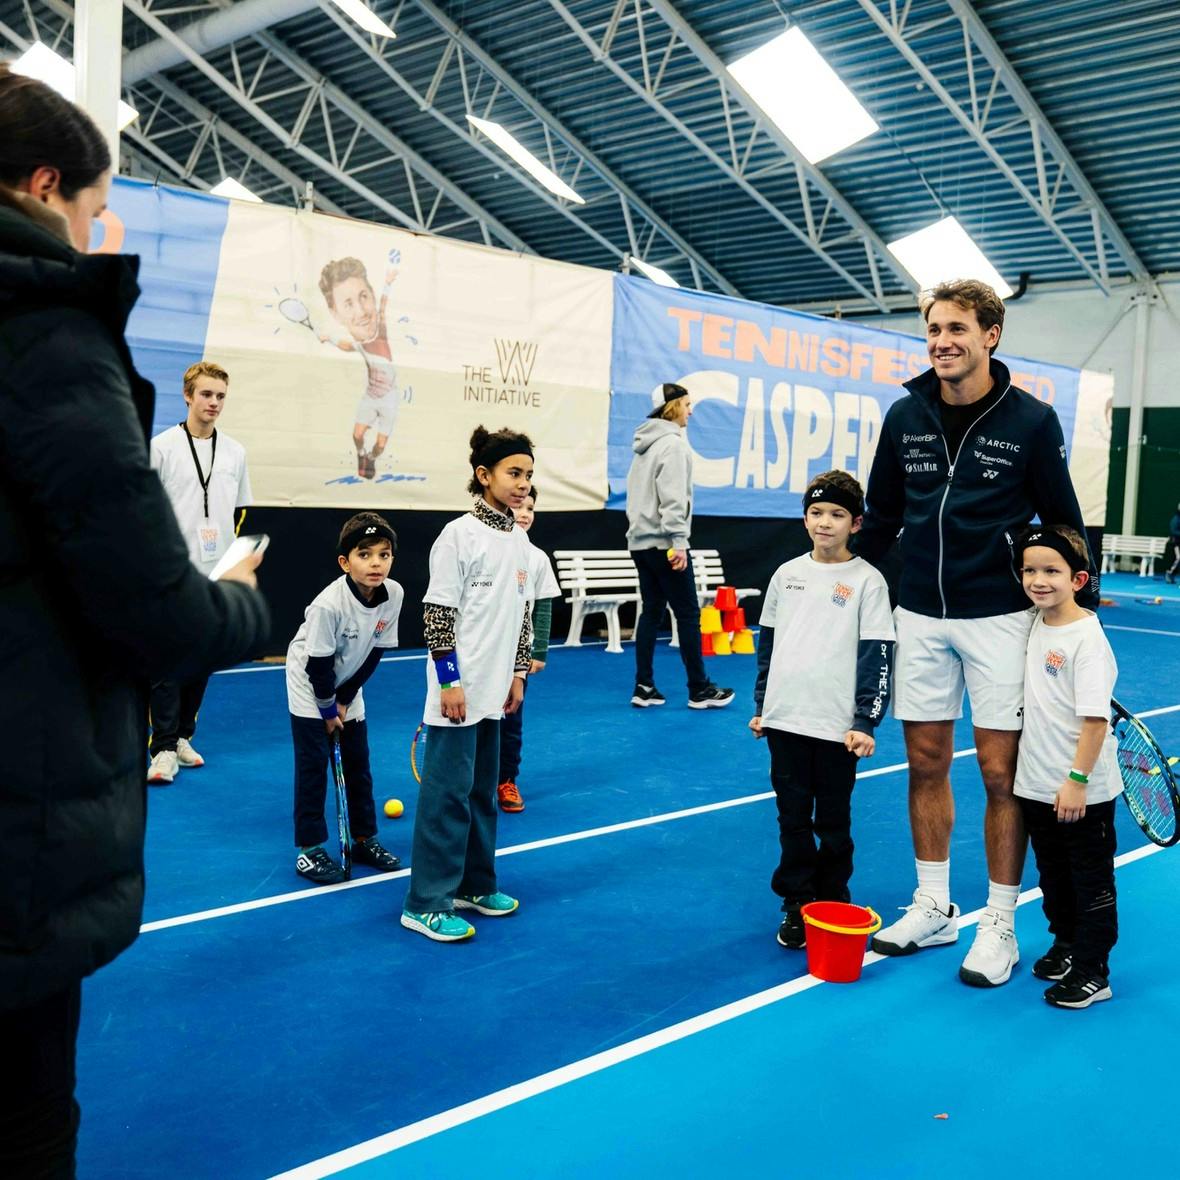 Tennisspiller Casper Ruud tar bilder med to barn på en innendørs tennishall i Trondheim